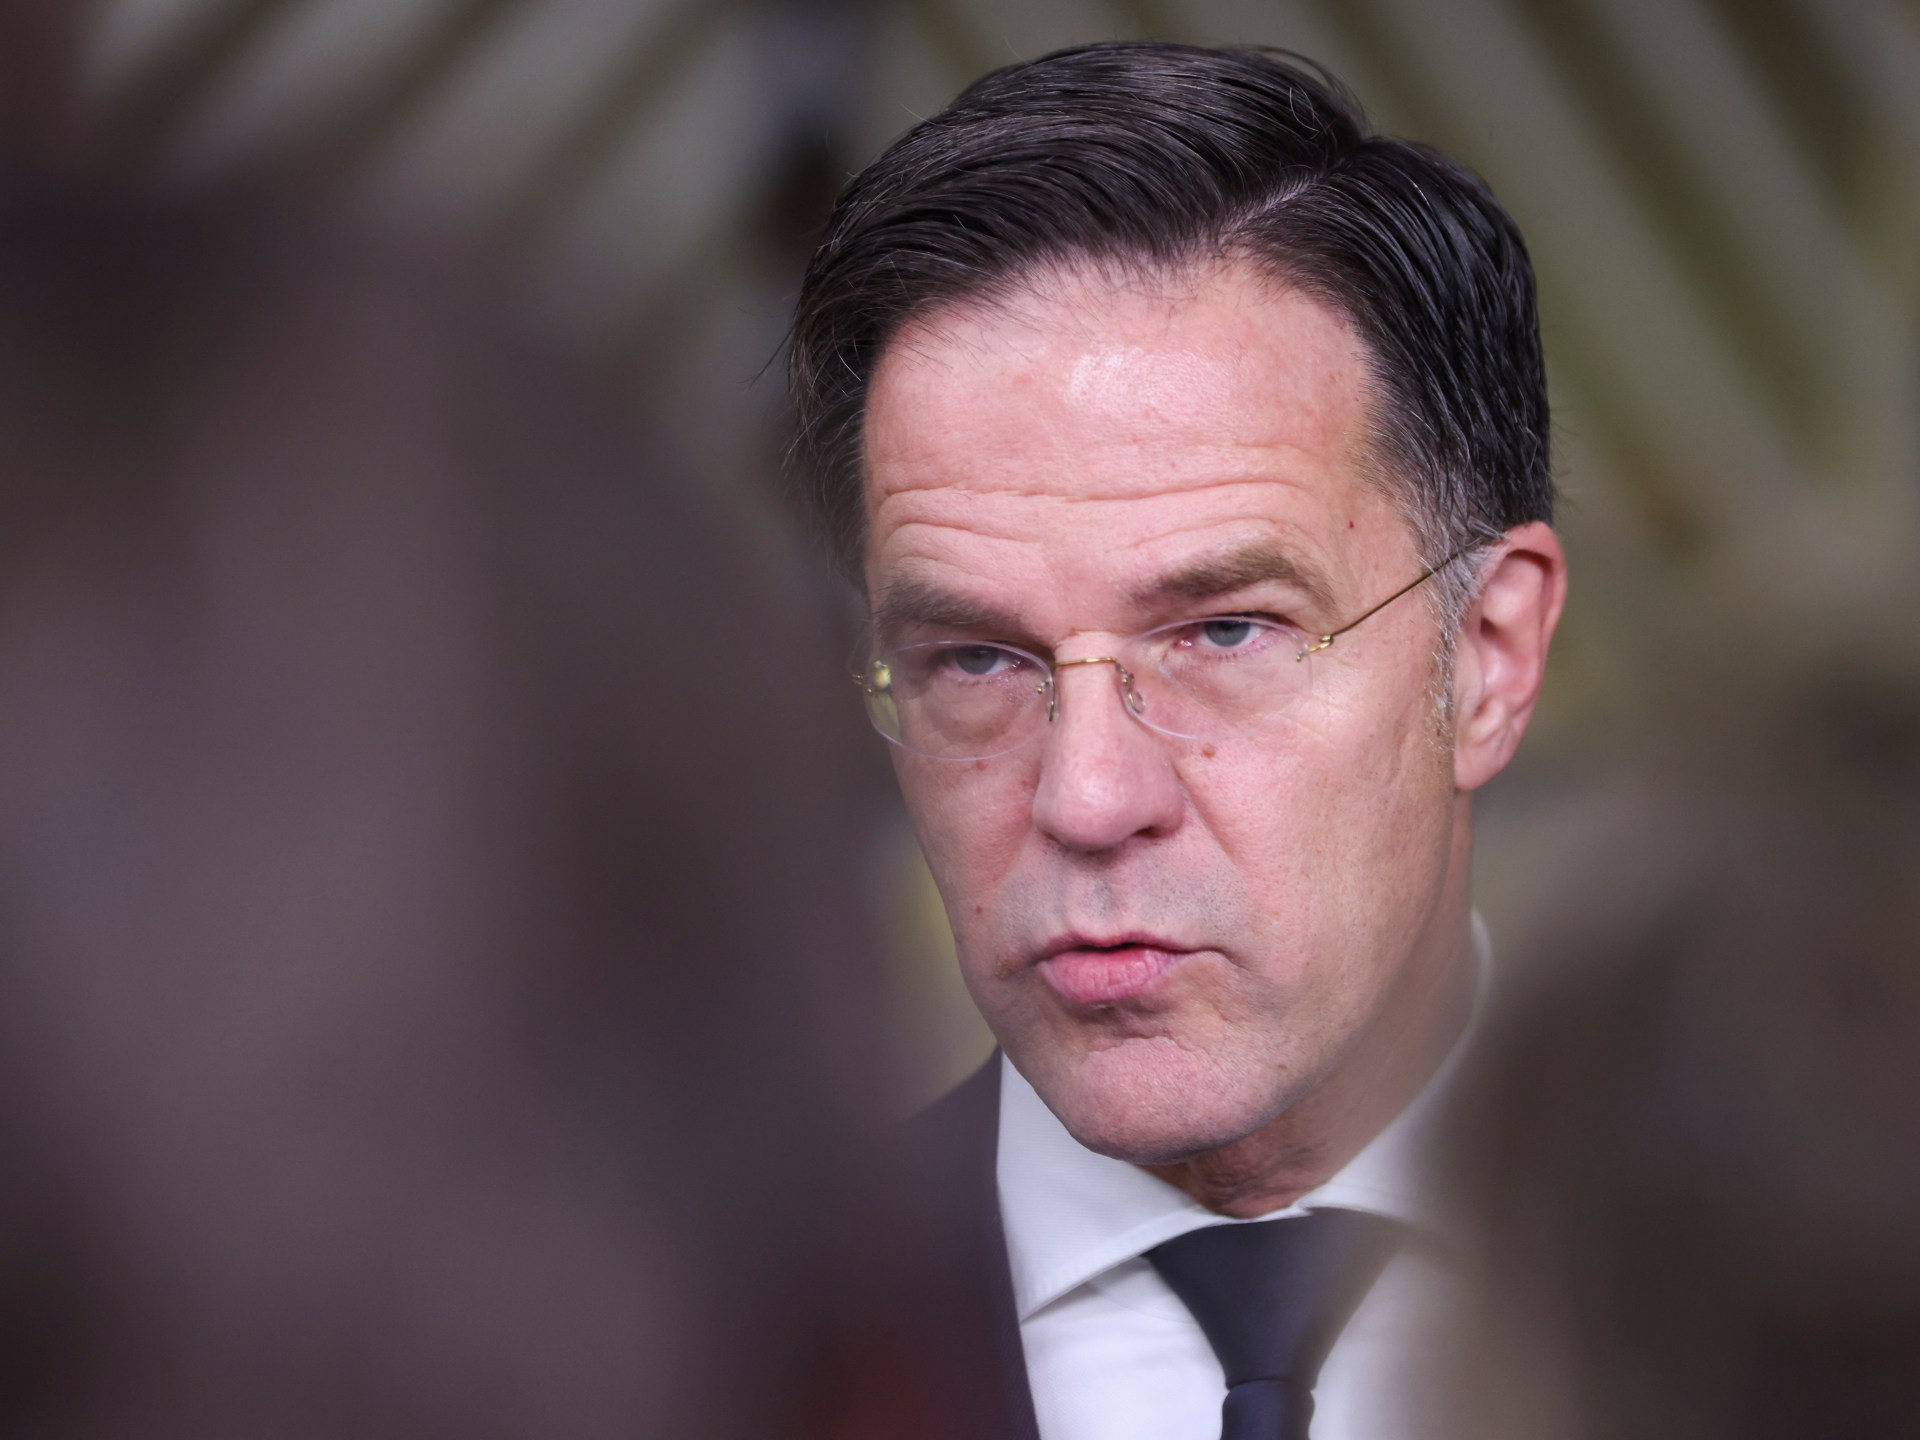 US, European powers back outgoing Dutch PM Mark Rutte as next NATO head